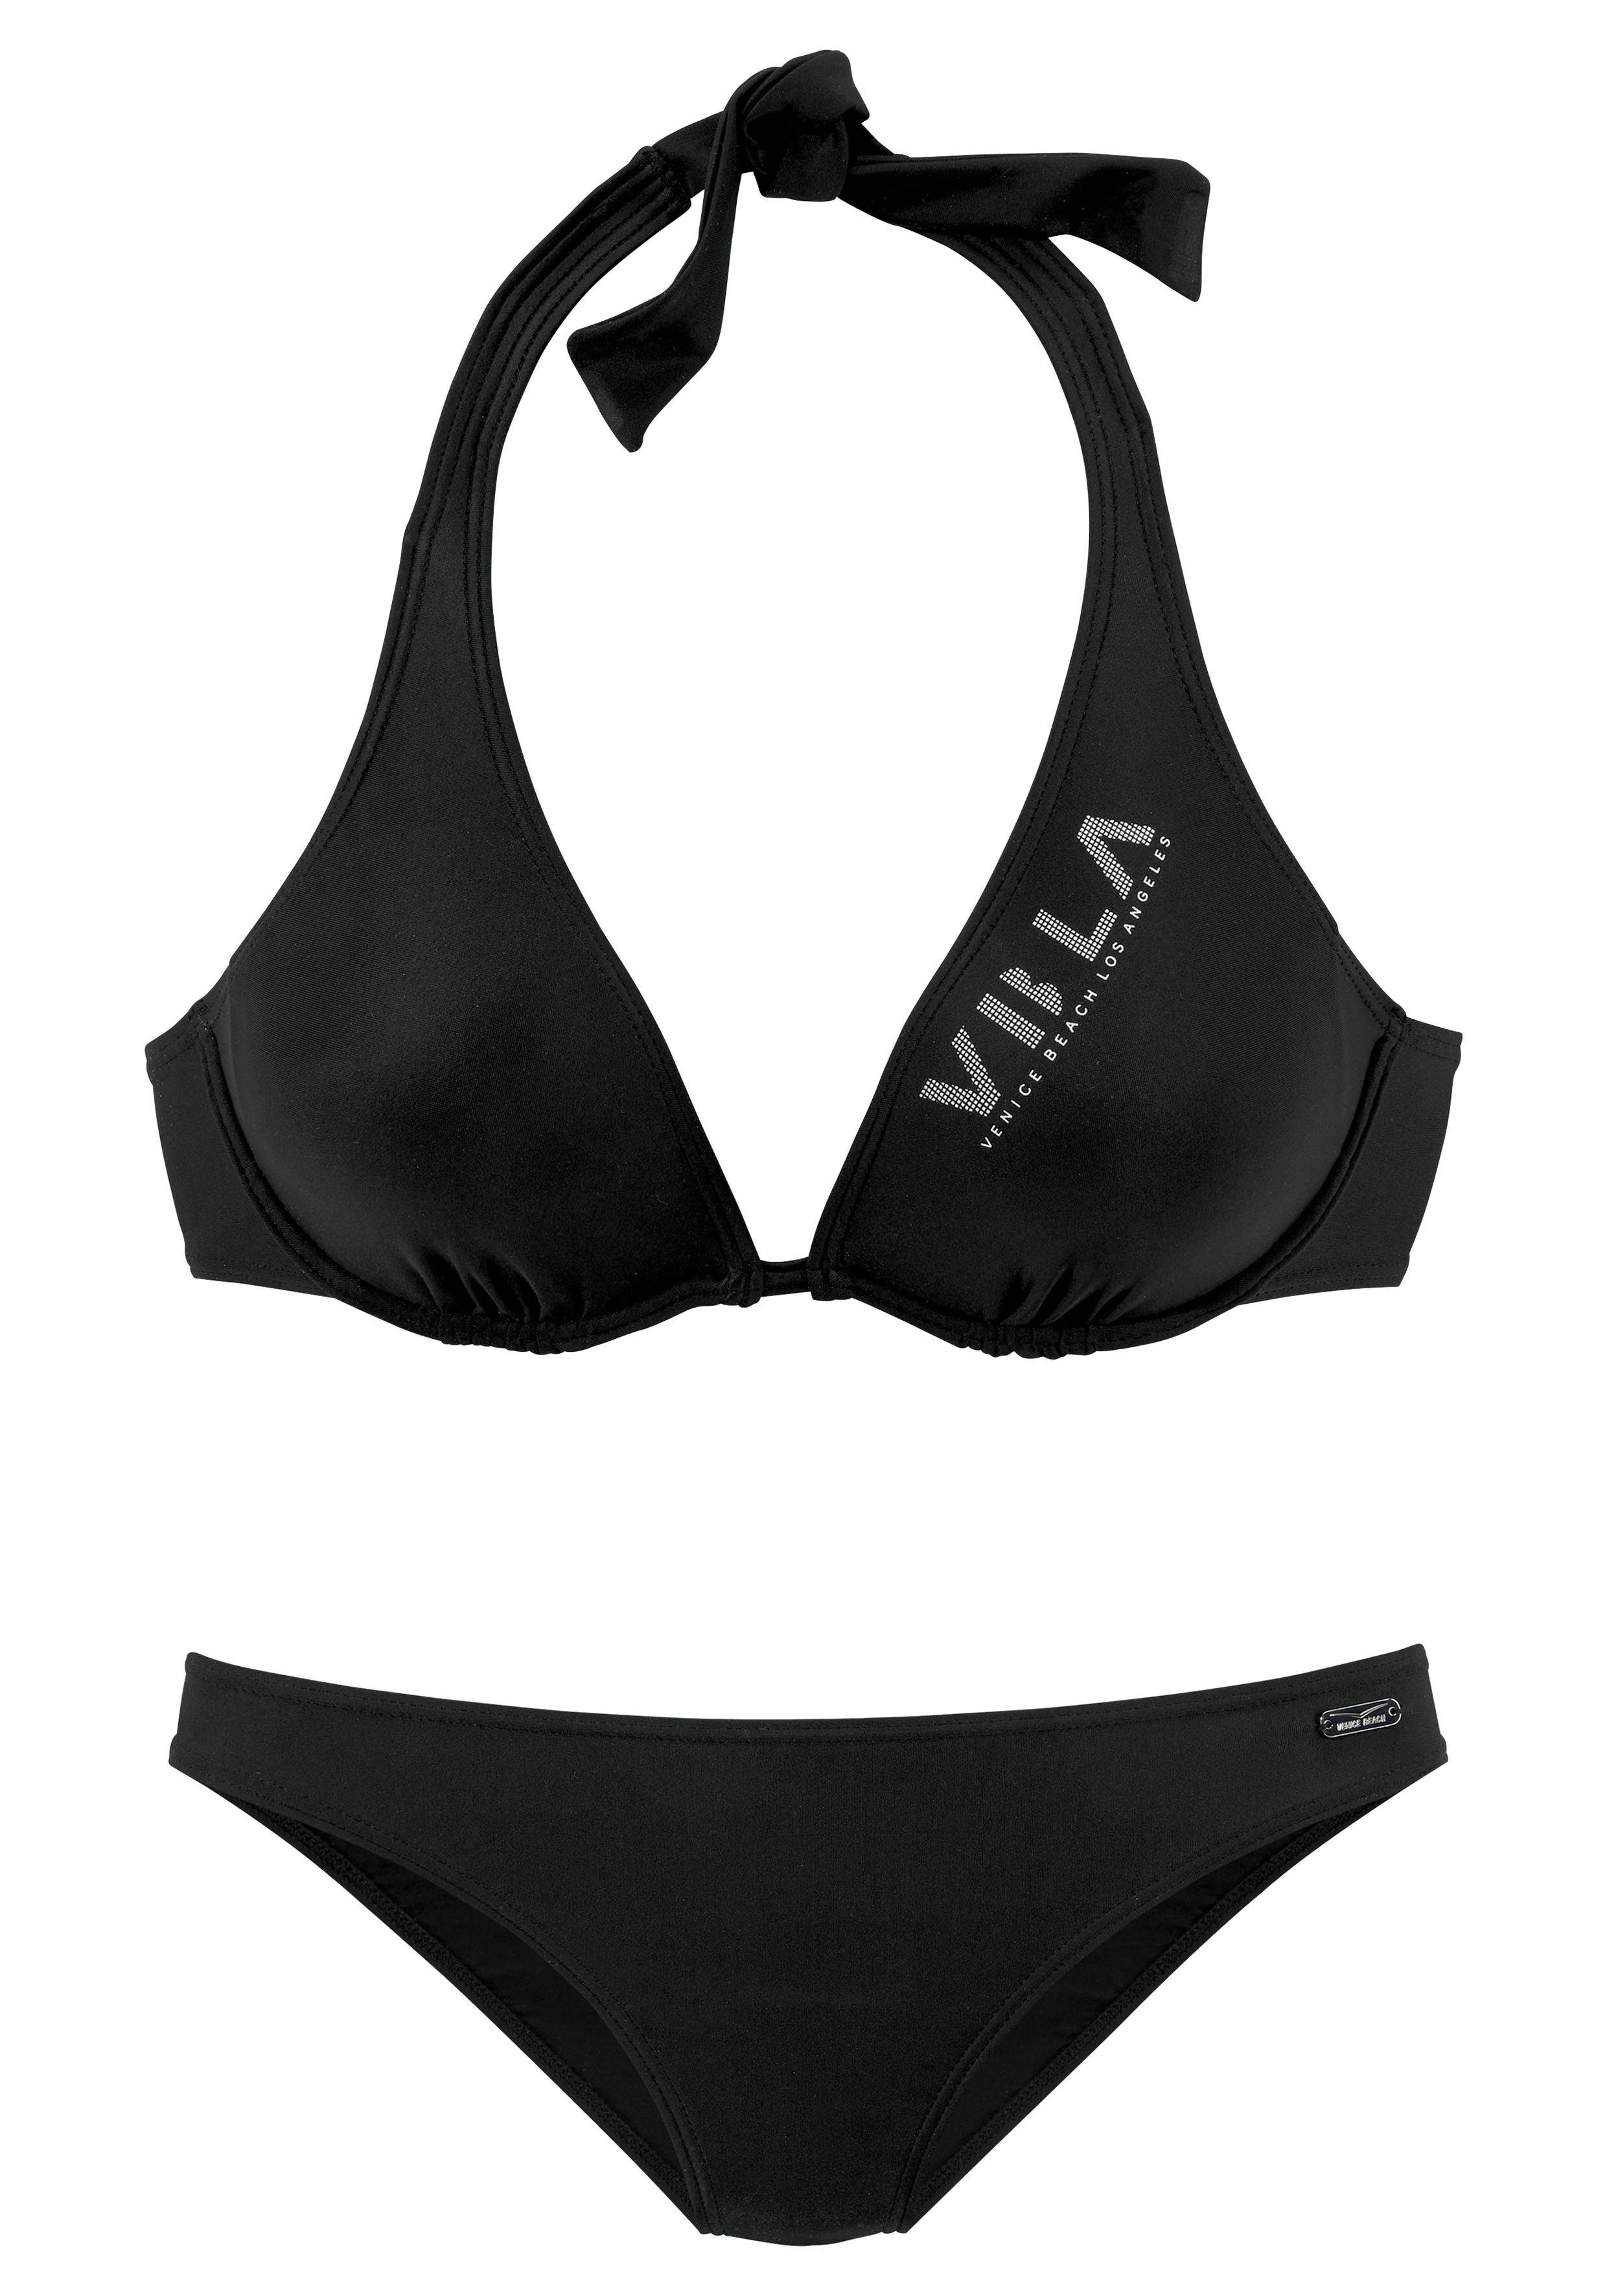 Venice Beach Bügel-Bikini mit schwarz Schriftzug kontrastfarbigen